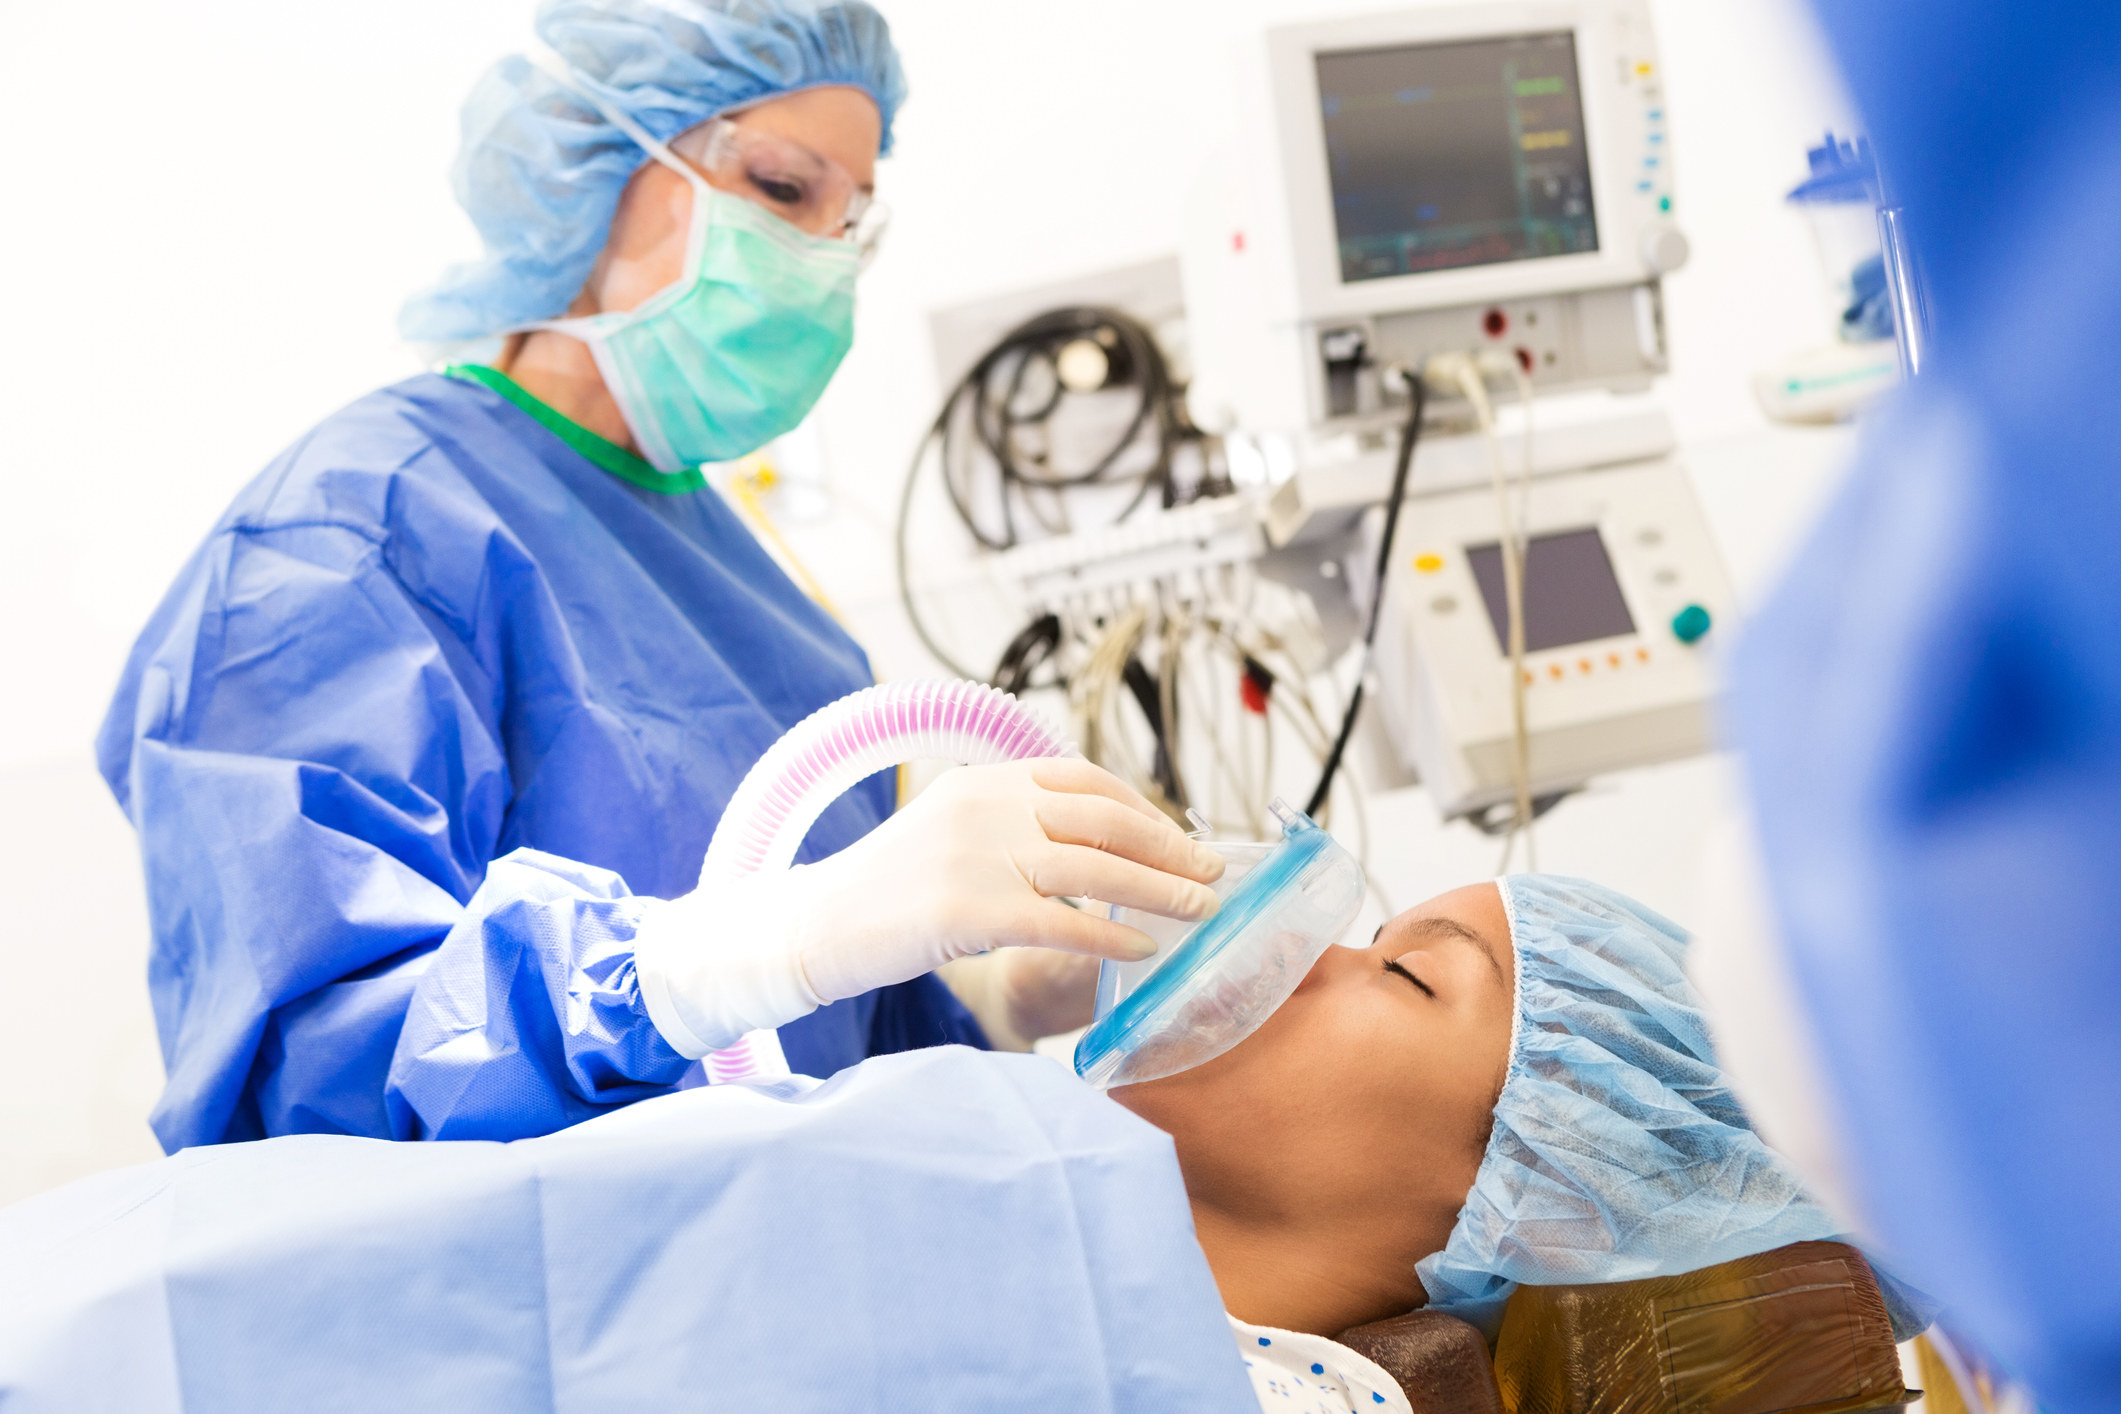 A nurse giving a patient oxygen during surgery